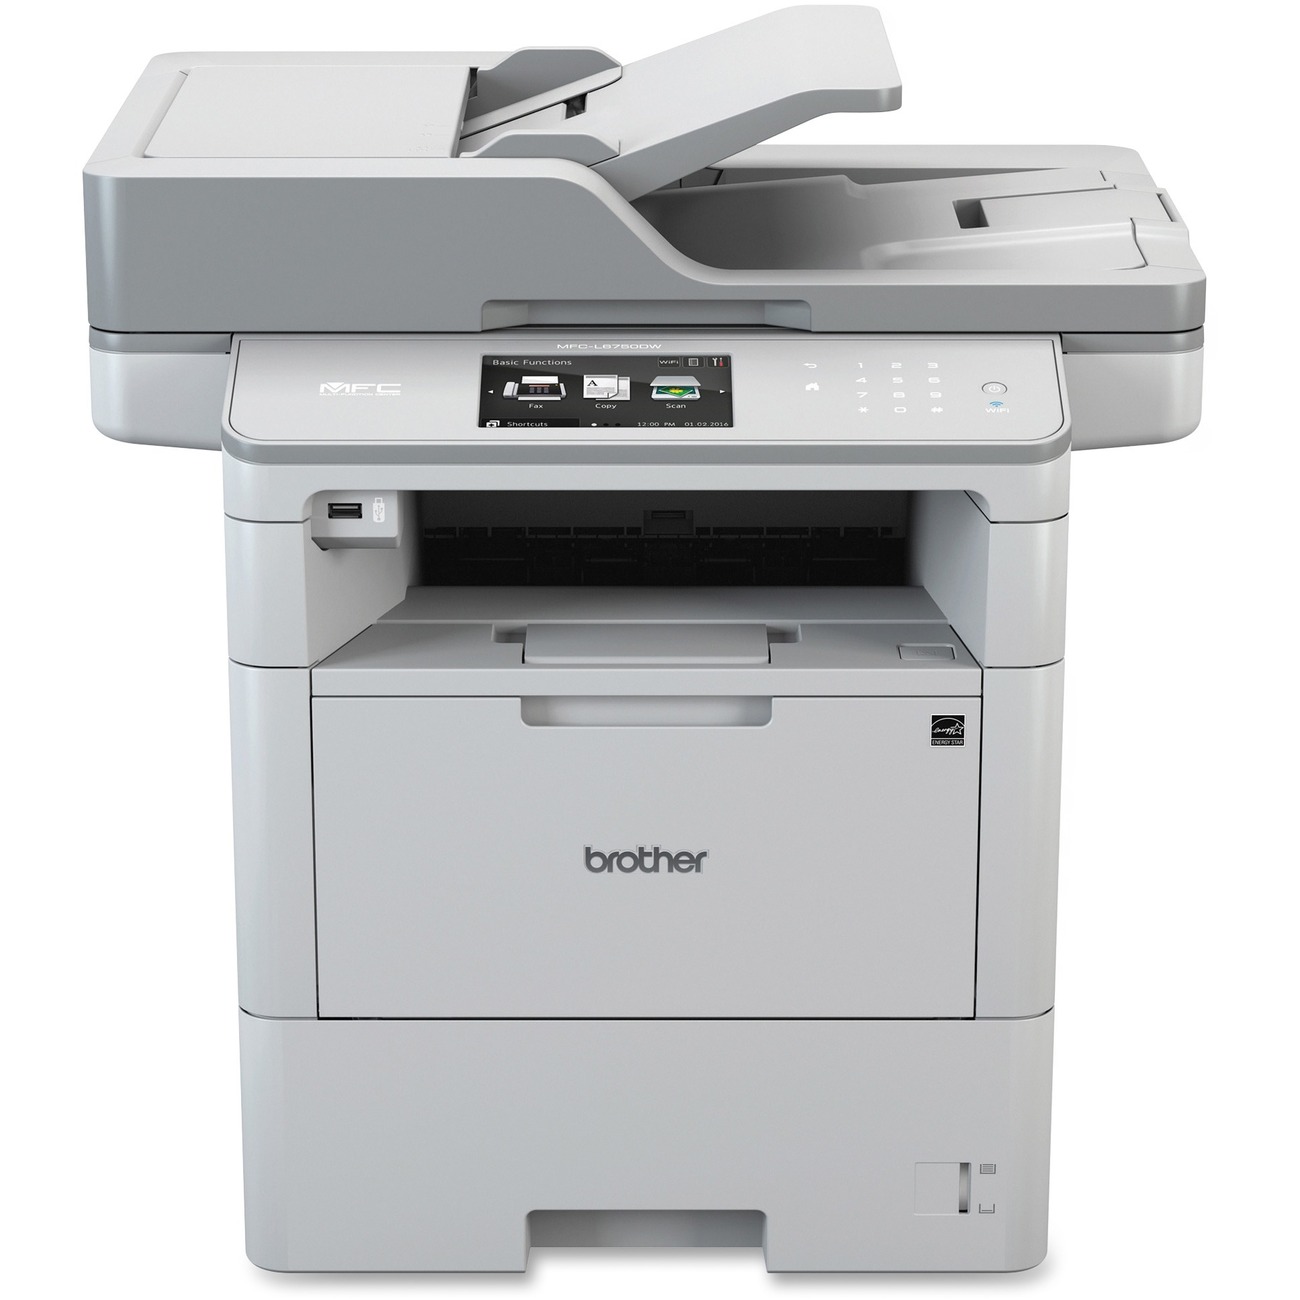 Brother MFC-L9670CDN imprimante laser couleur A4 multifonction (4